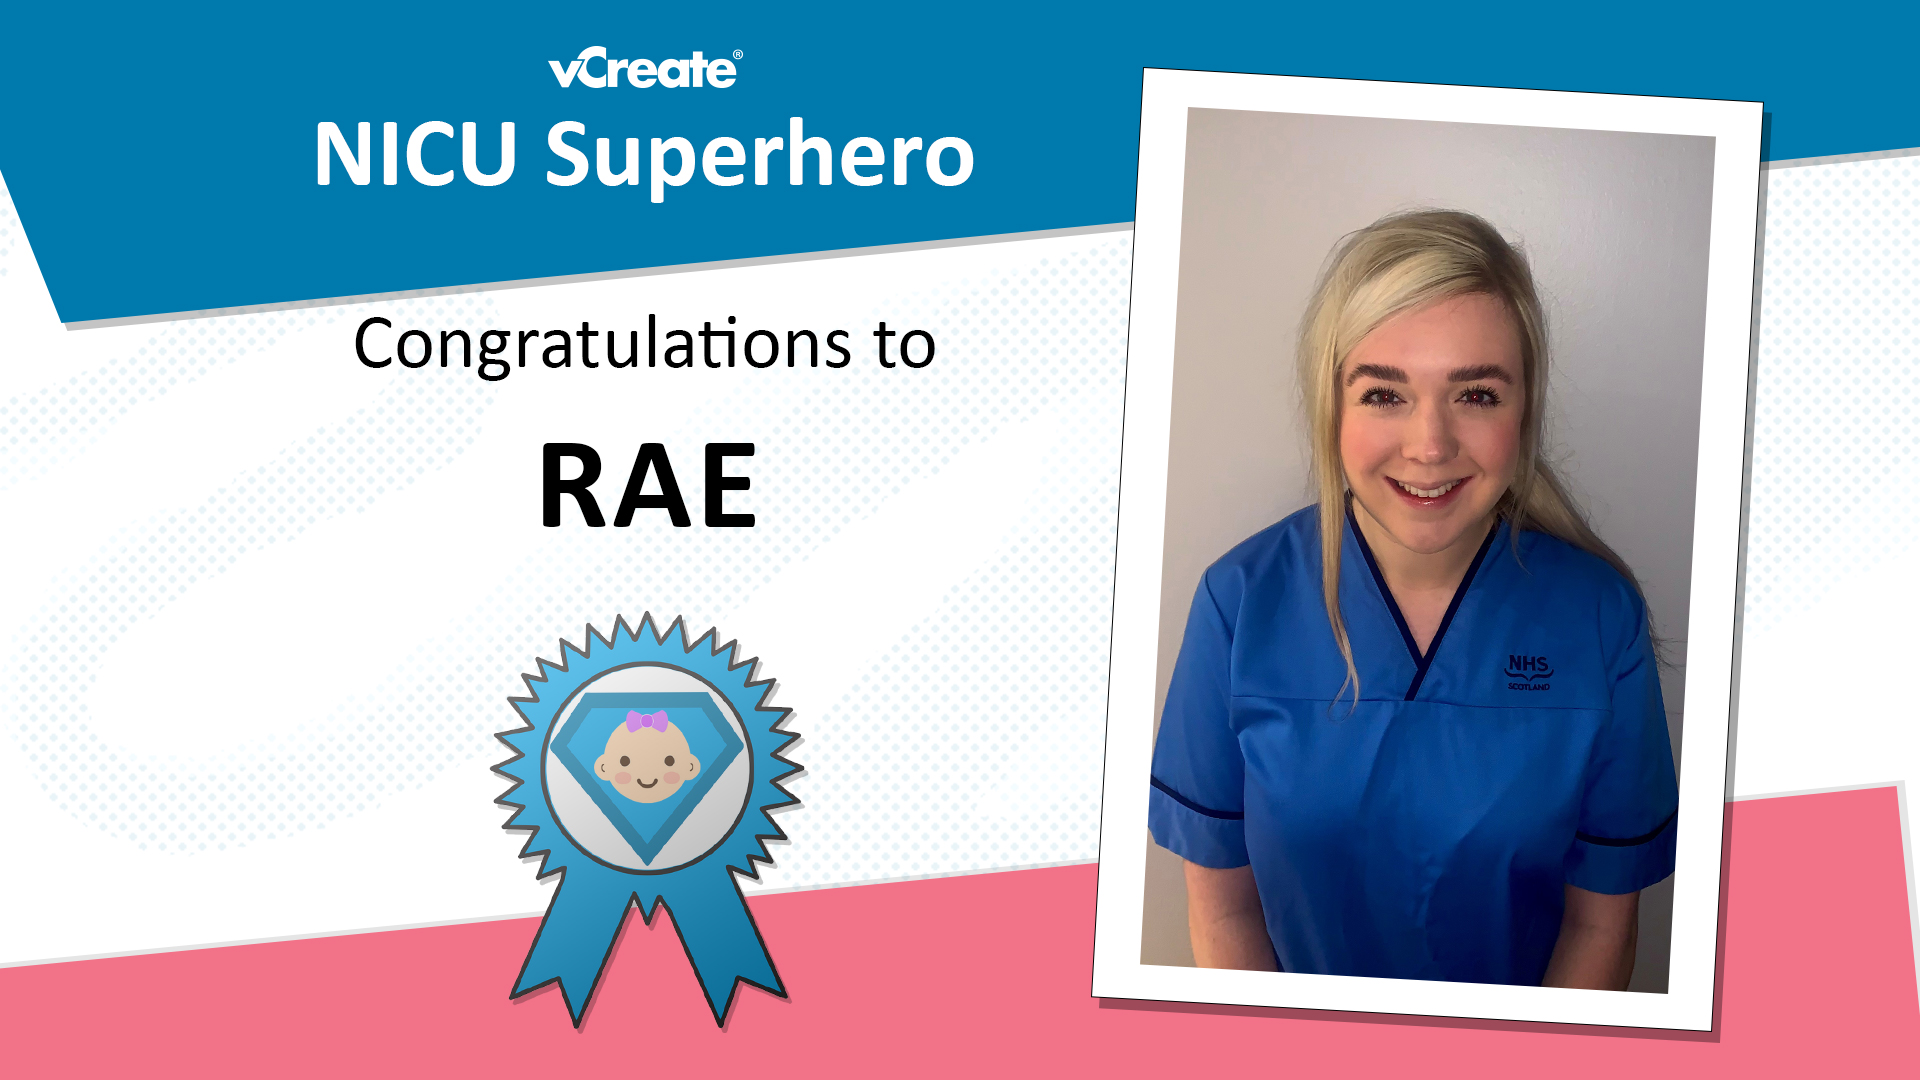 Rae from Ninewells Hospital is a NICU Superhero! 